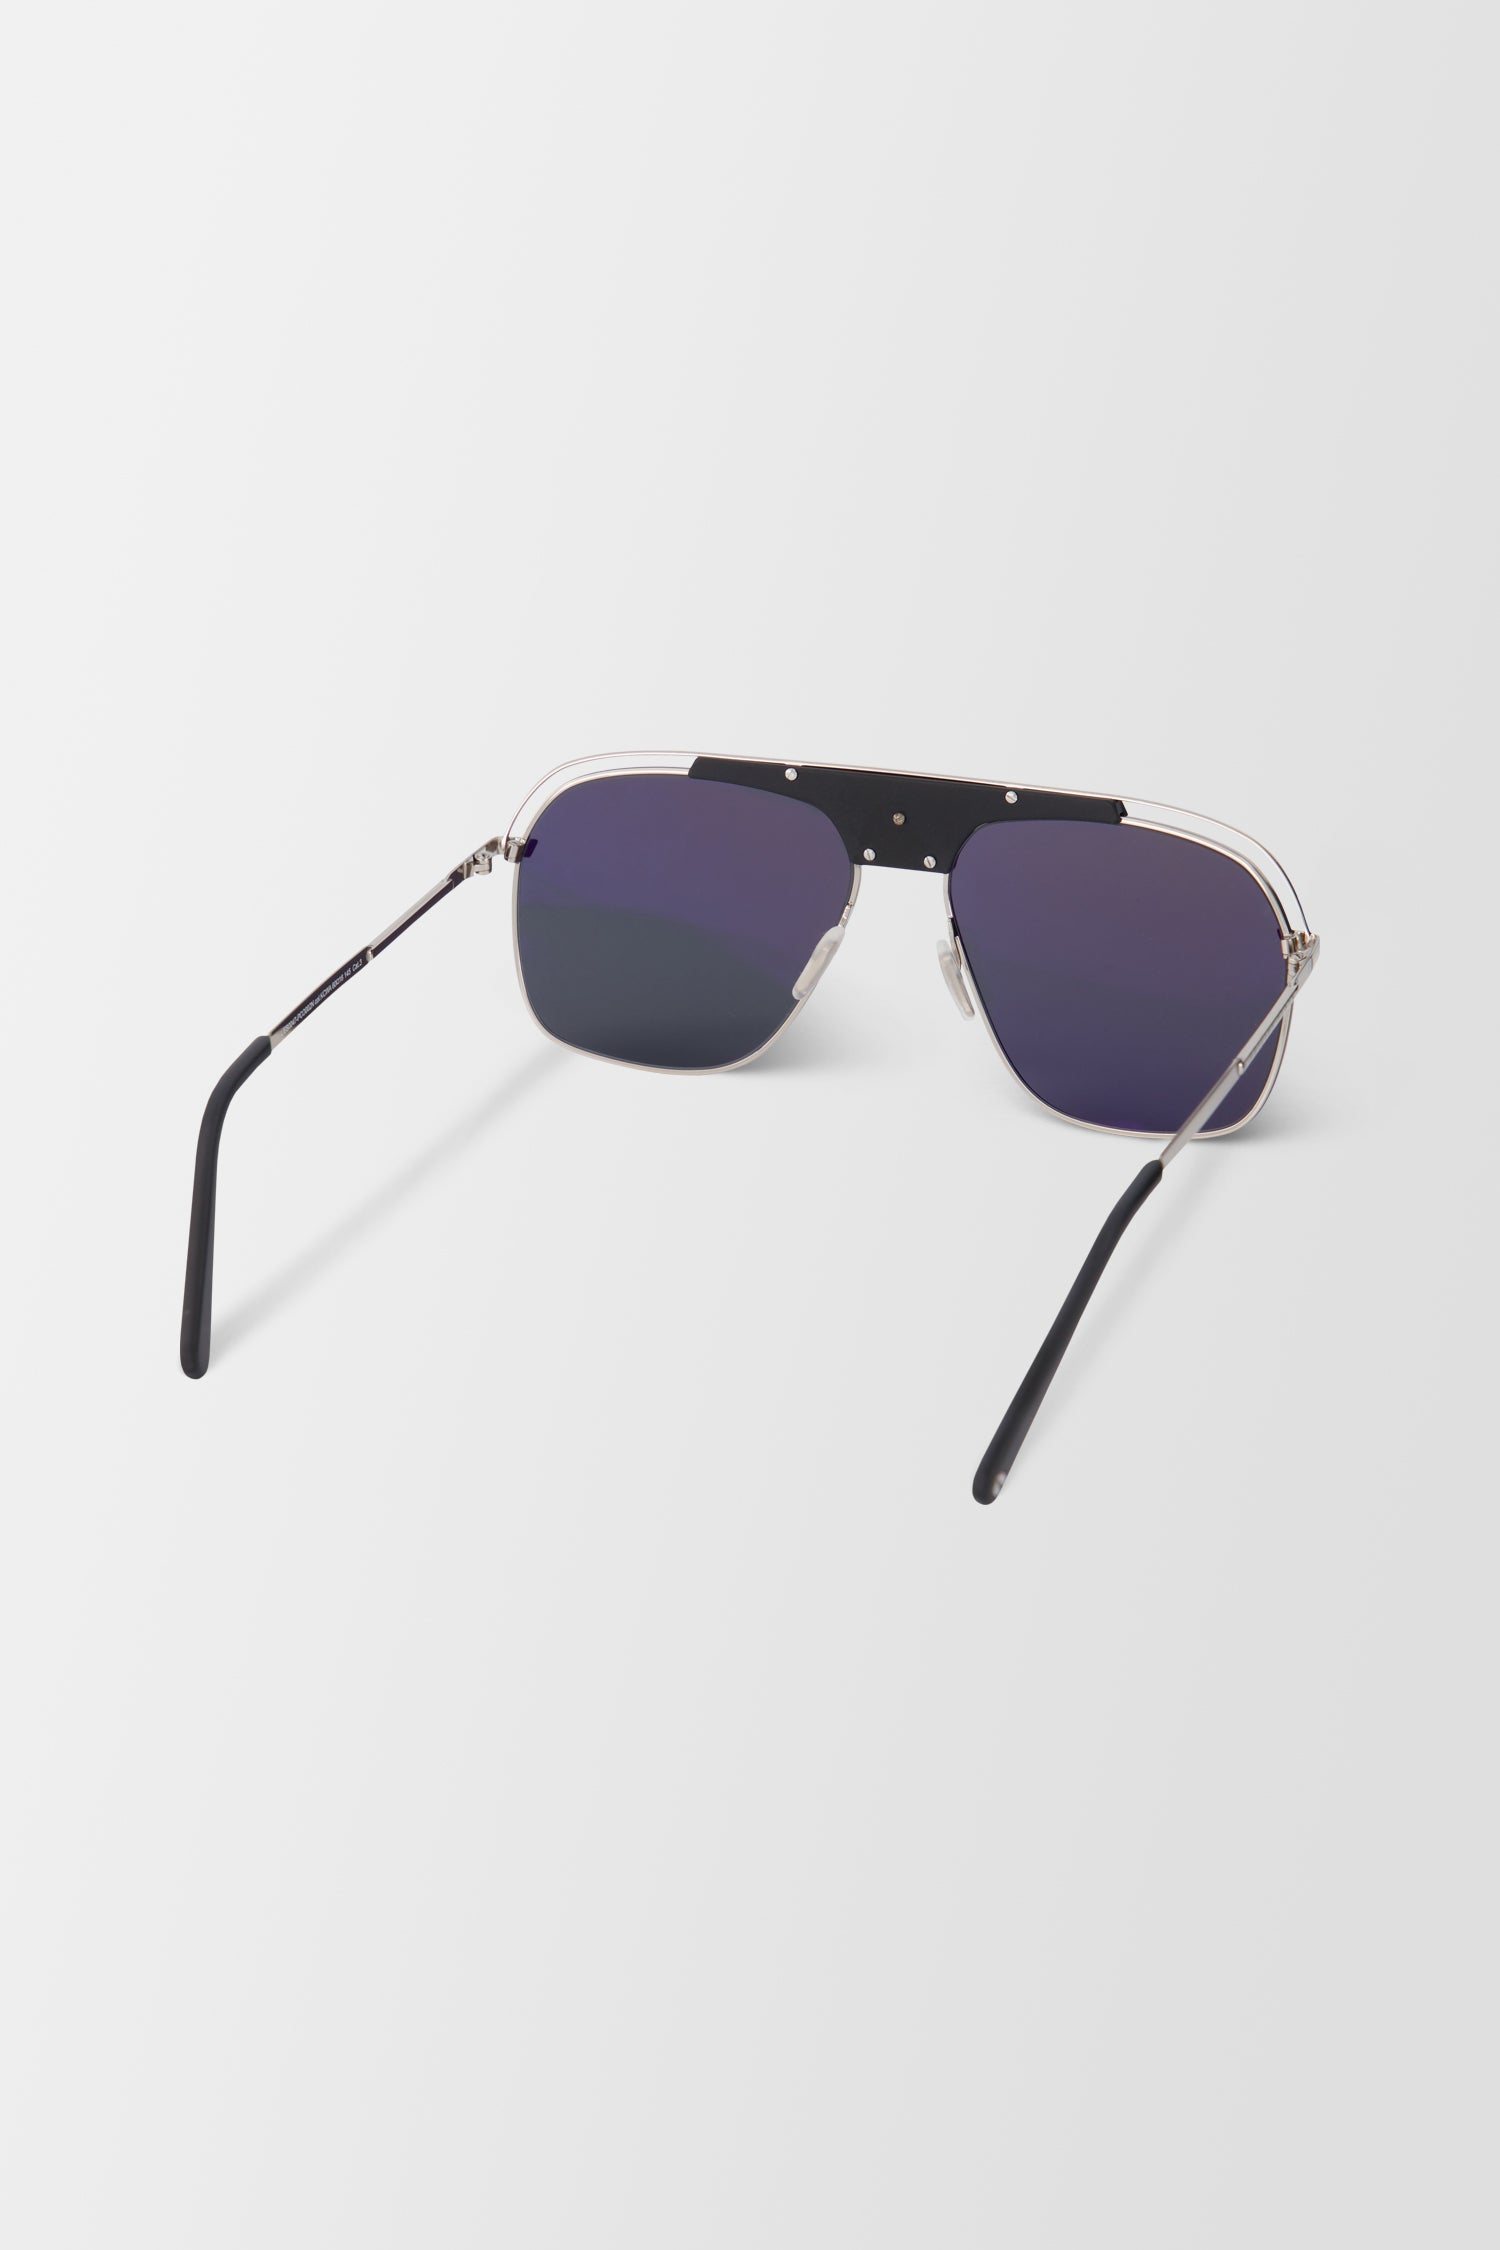 Philipp Plein Black Noah Sunglasses